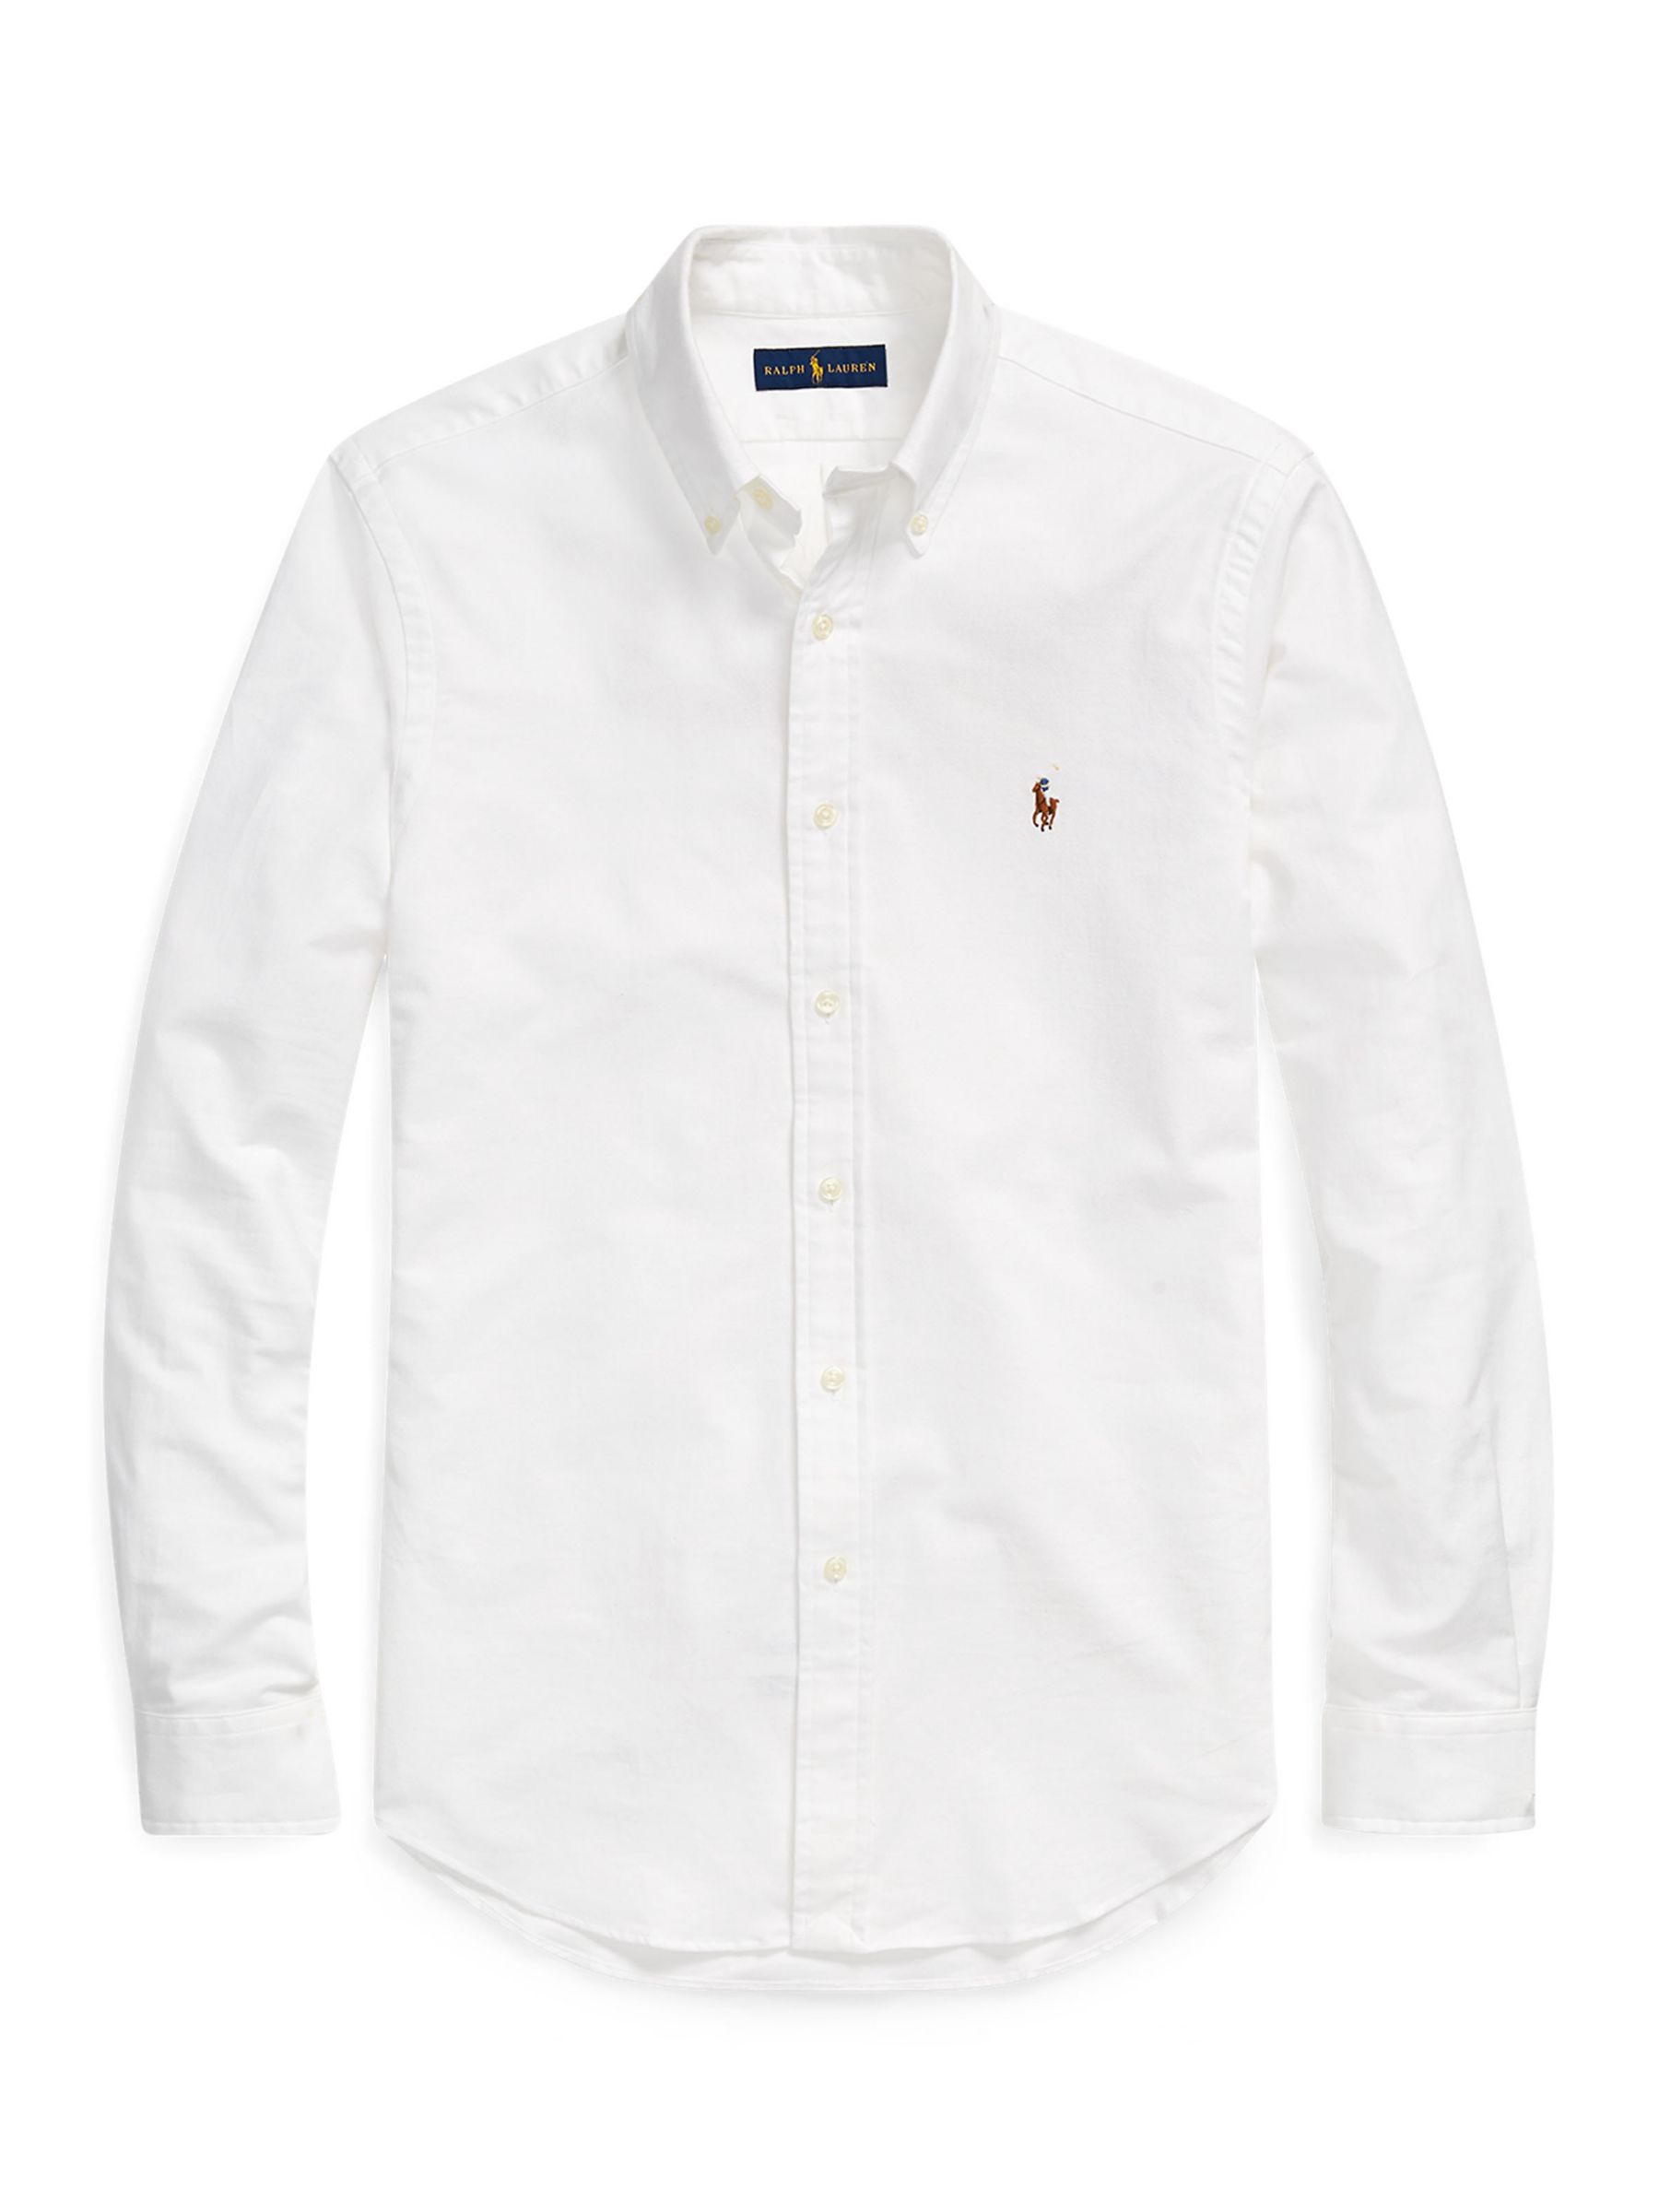 Buy Polo Ralph Lauren Slim Fit Oxford Shirt Online at johnlewis.com